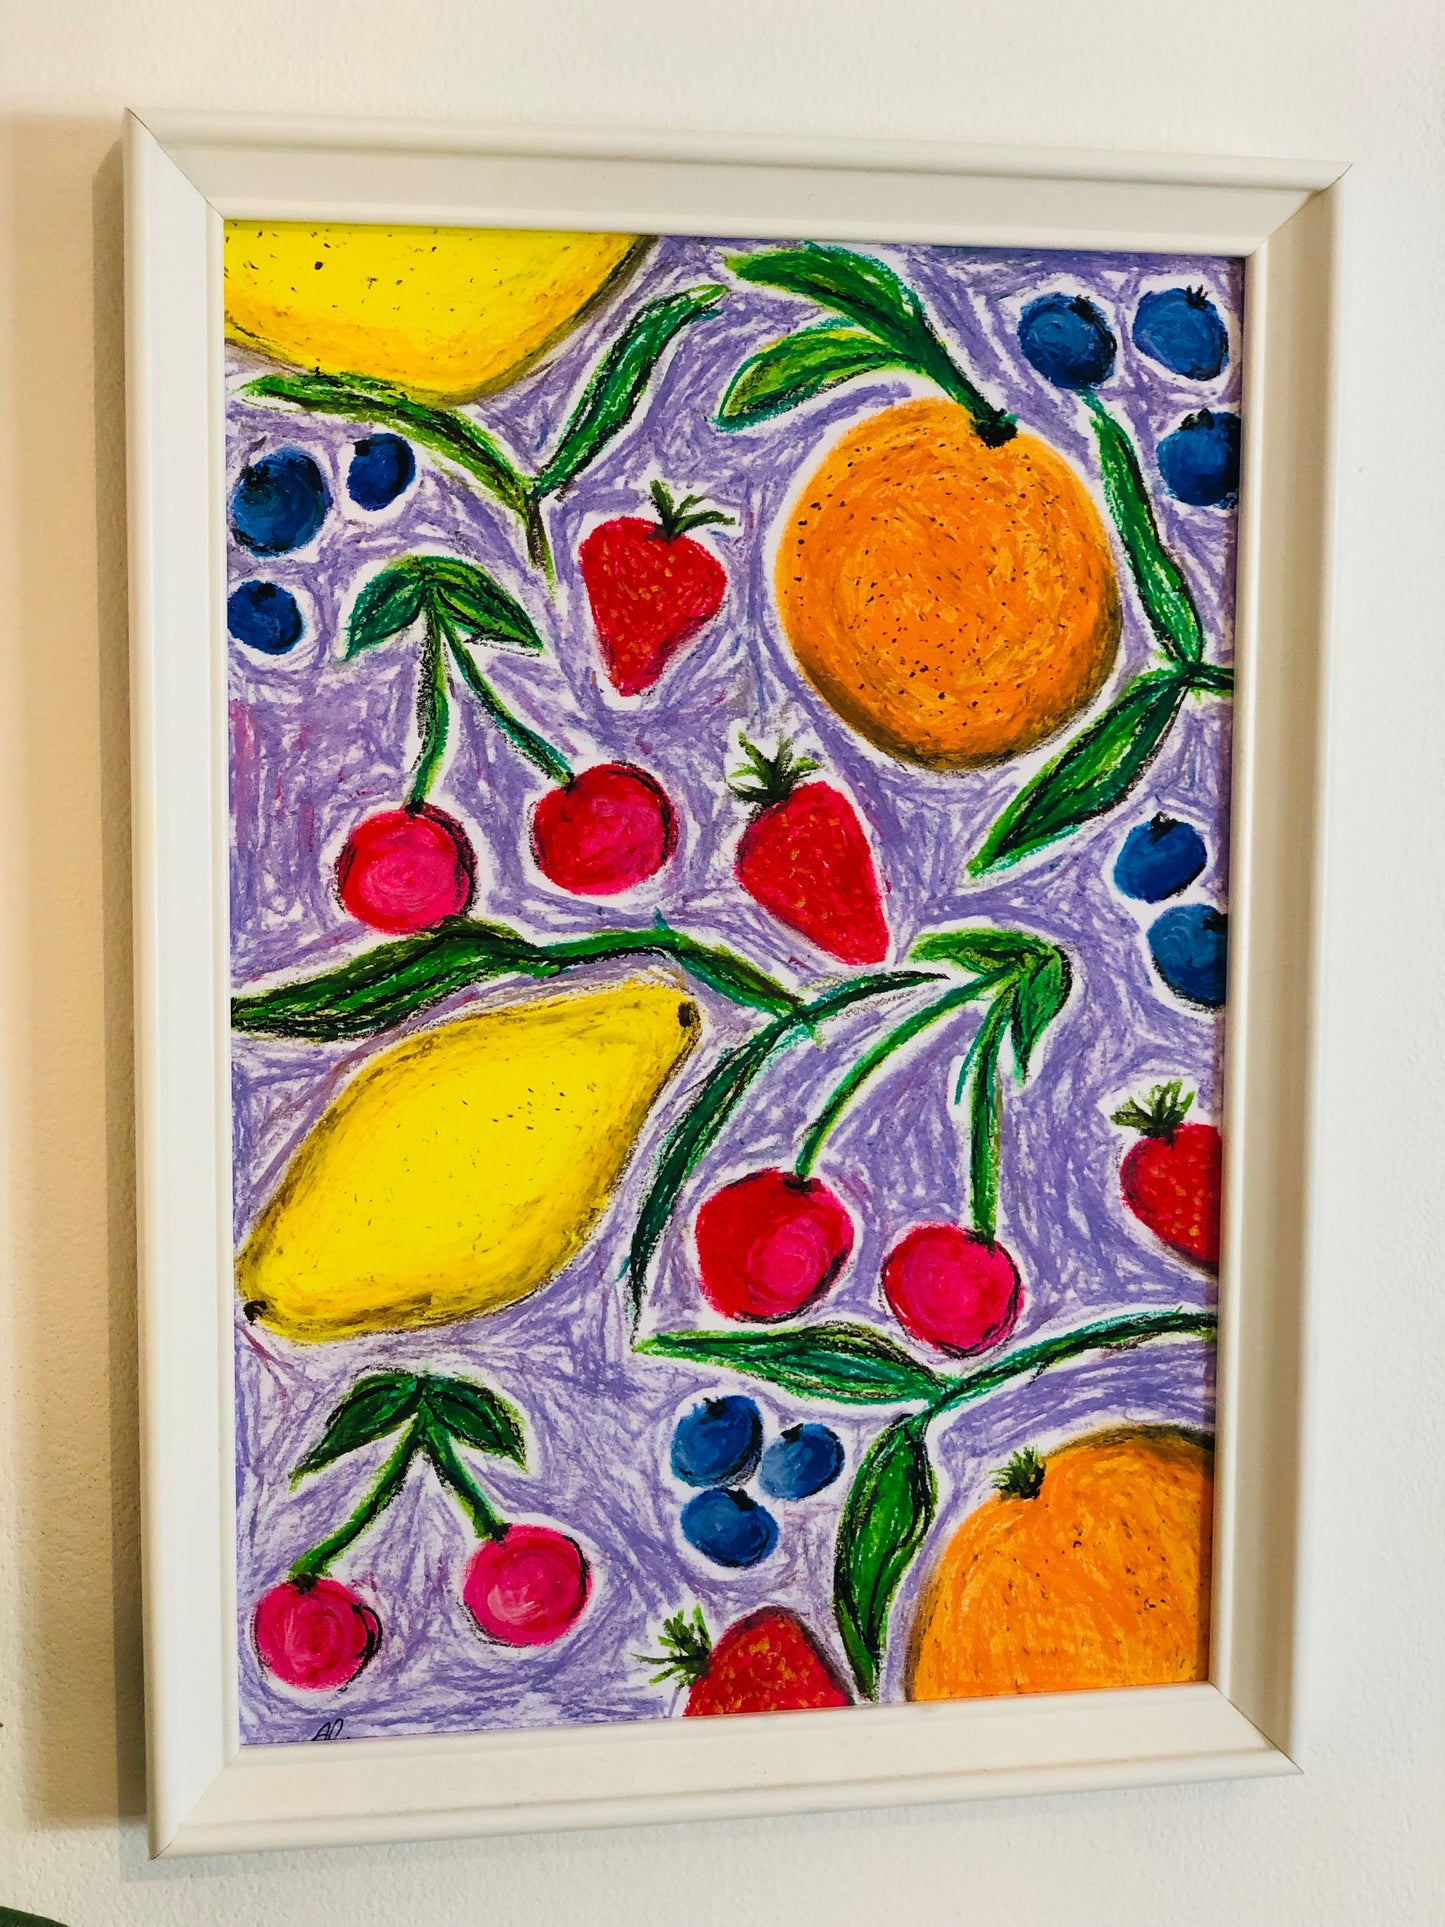 Juicy Fruits, A4 Unframed Original Artwork In Oil Pastels